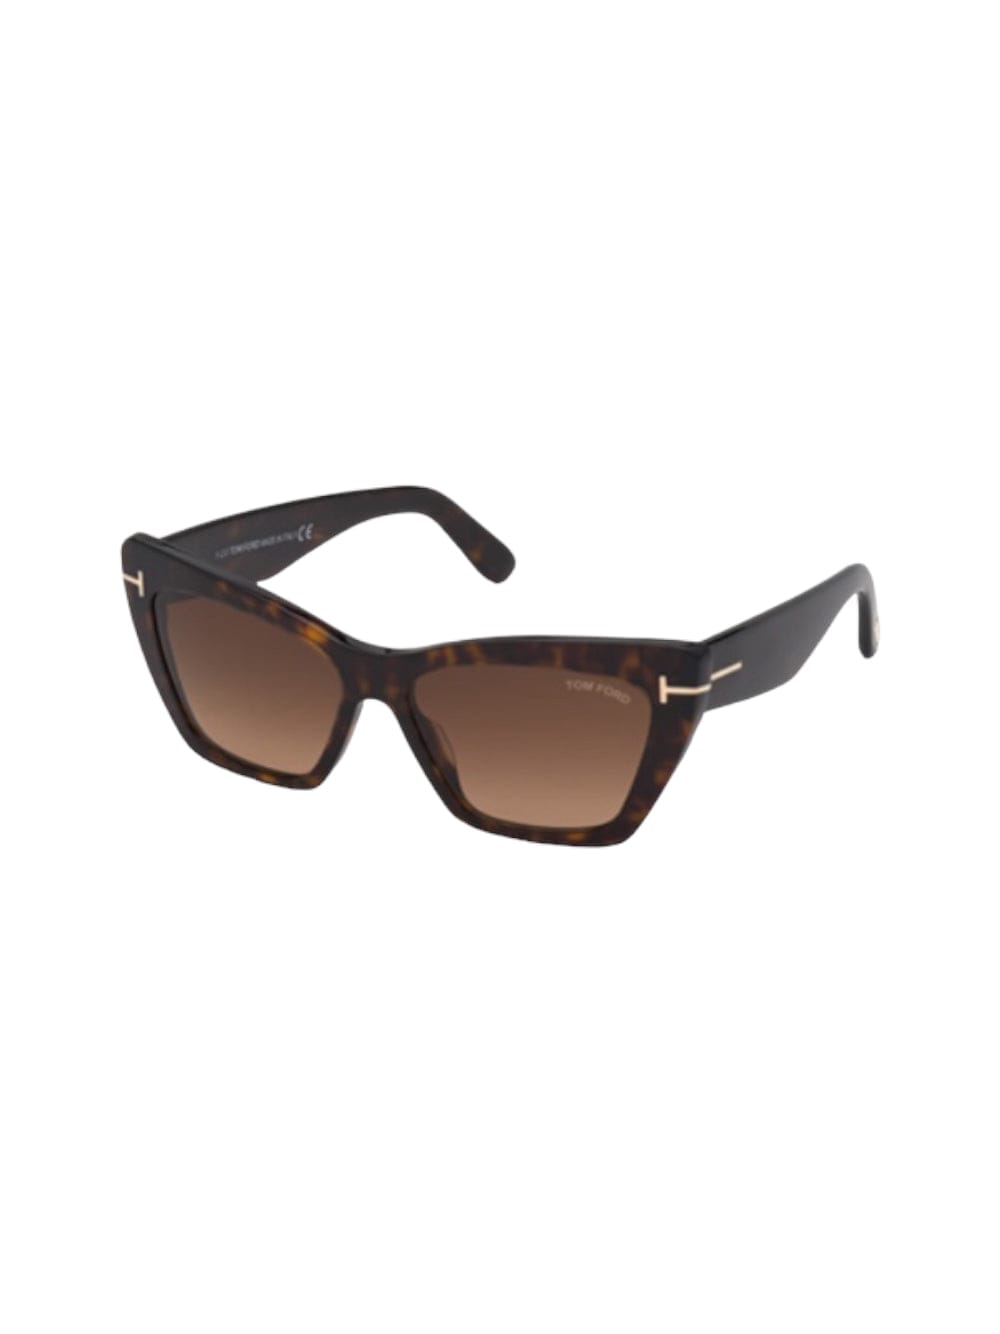 Tom Ford Wyatt - Tf871 - Havana Sunglasses